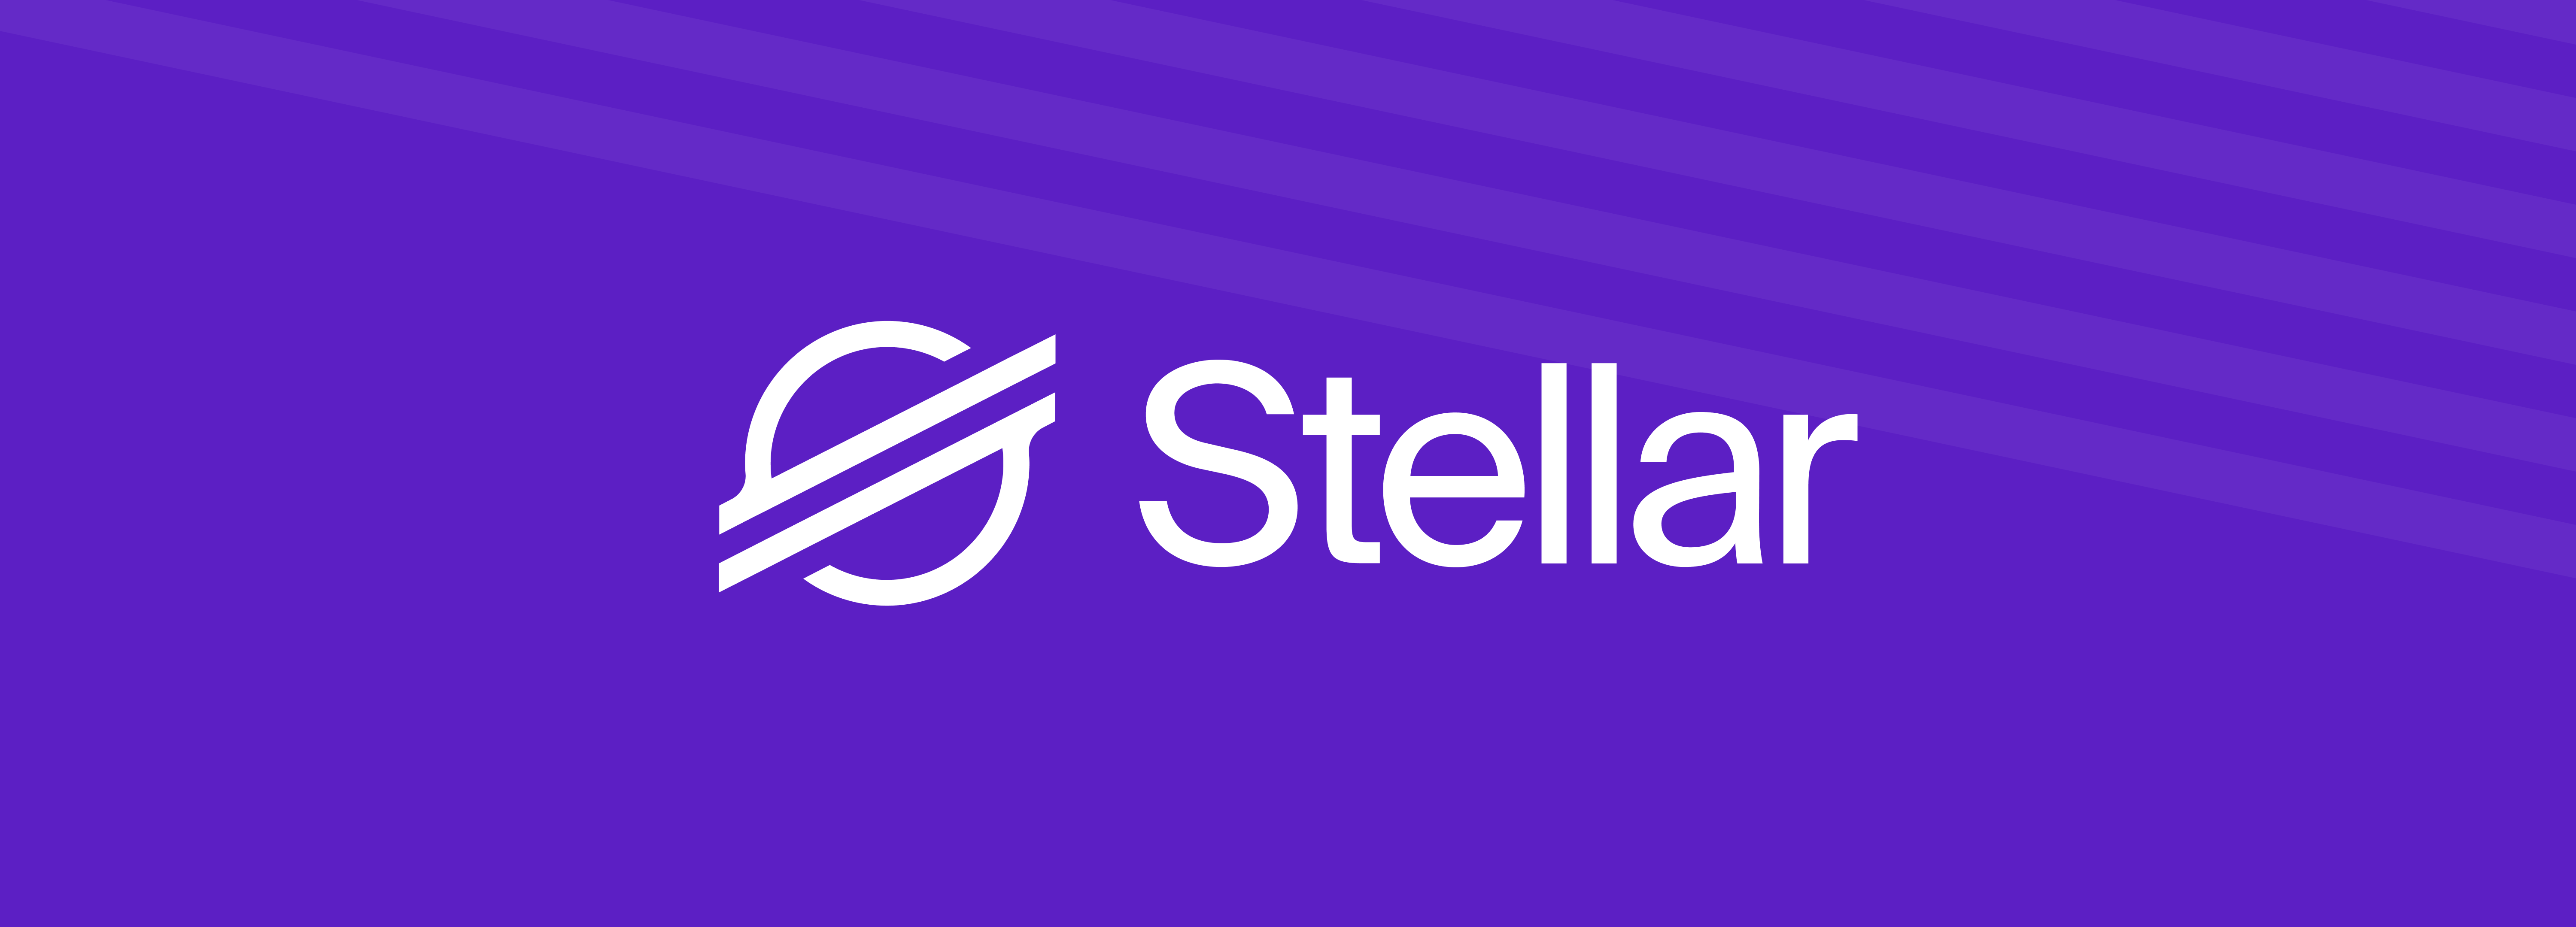 Stellar: 暗号通貨の作成と取引のための分散型ネットワーク